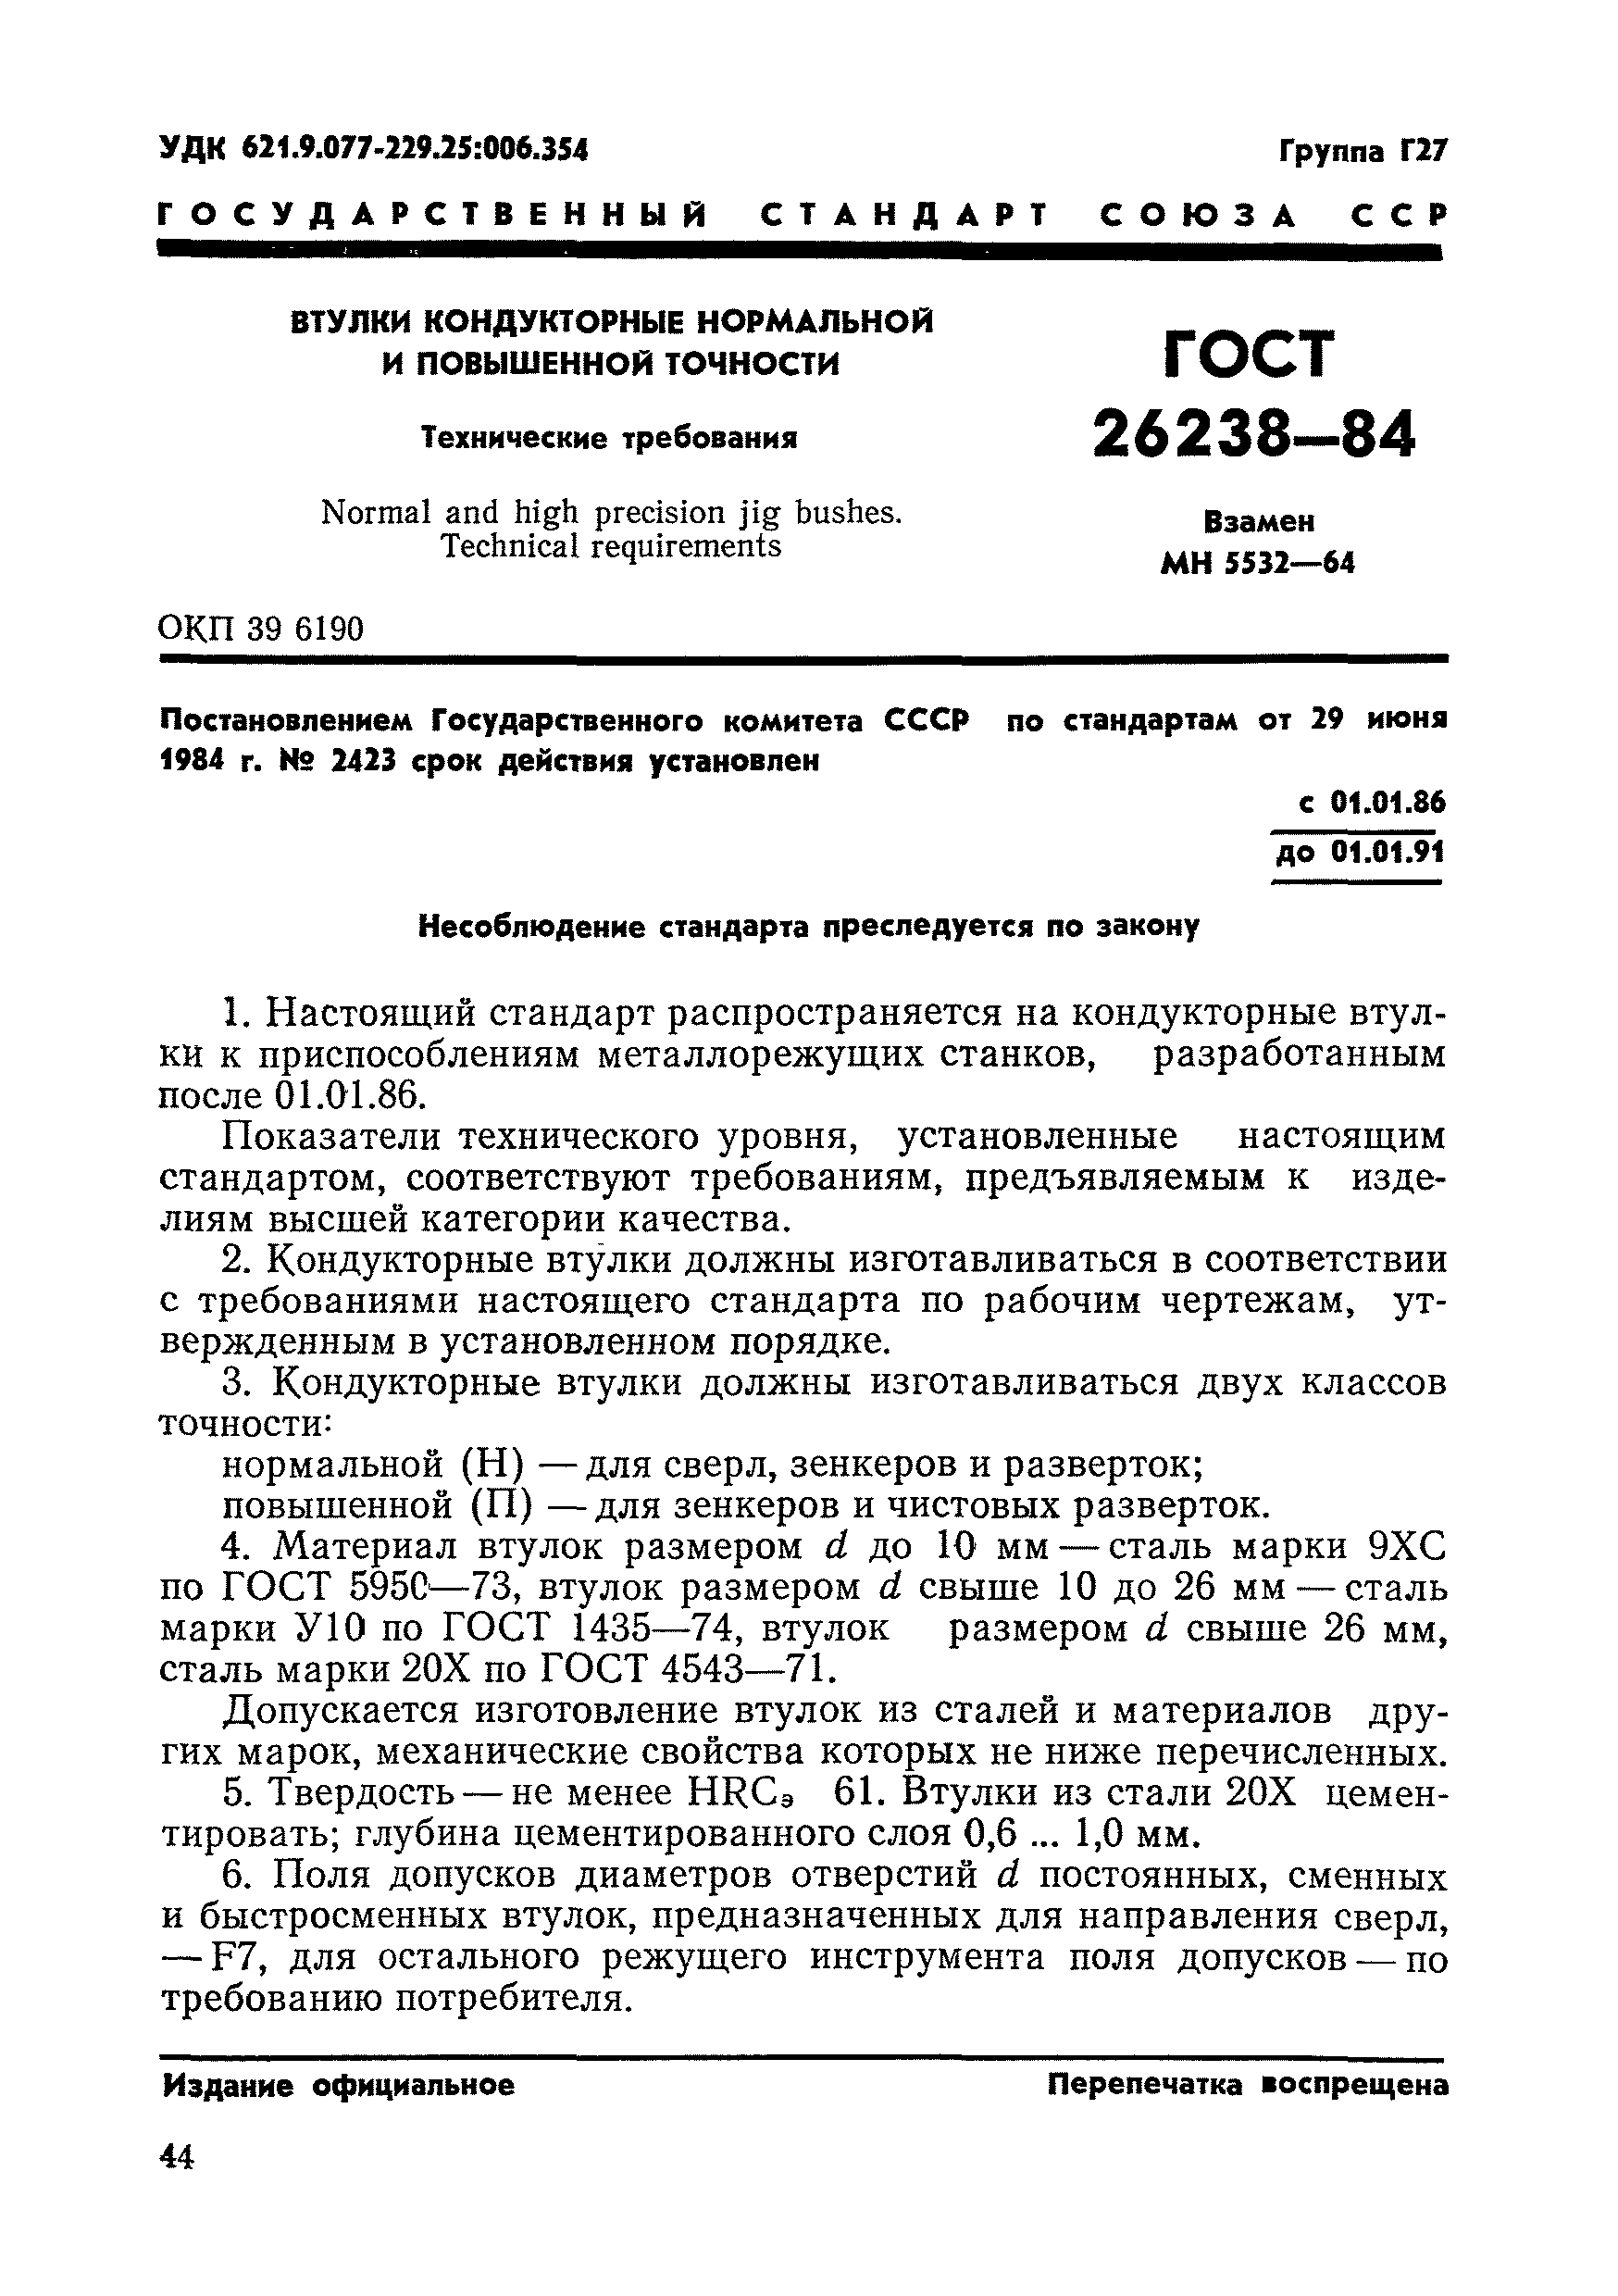 ГОСТ 26238-84